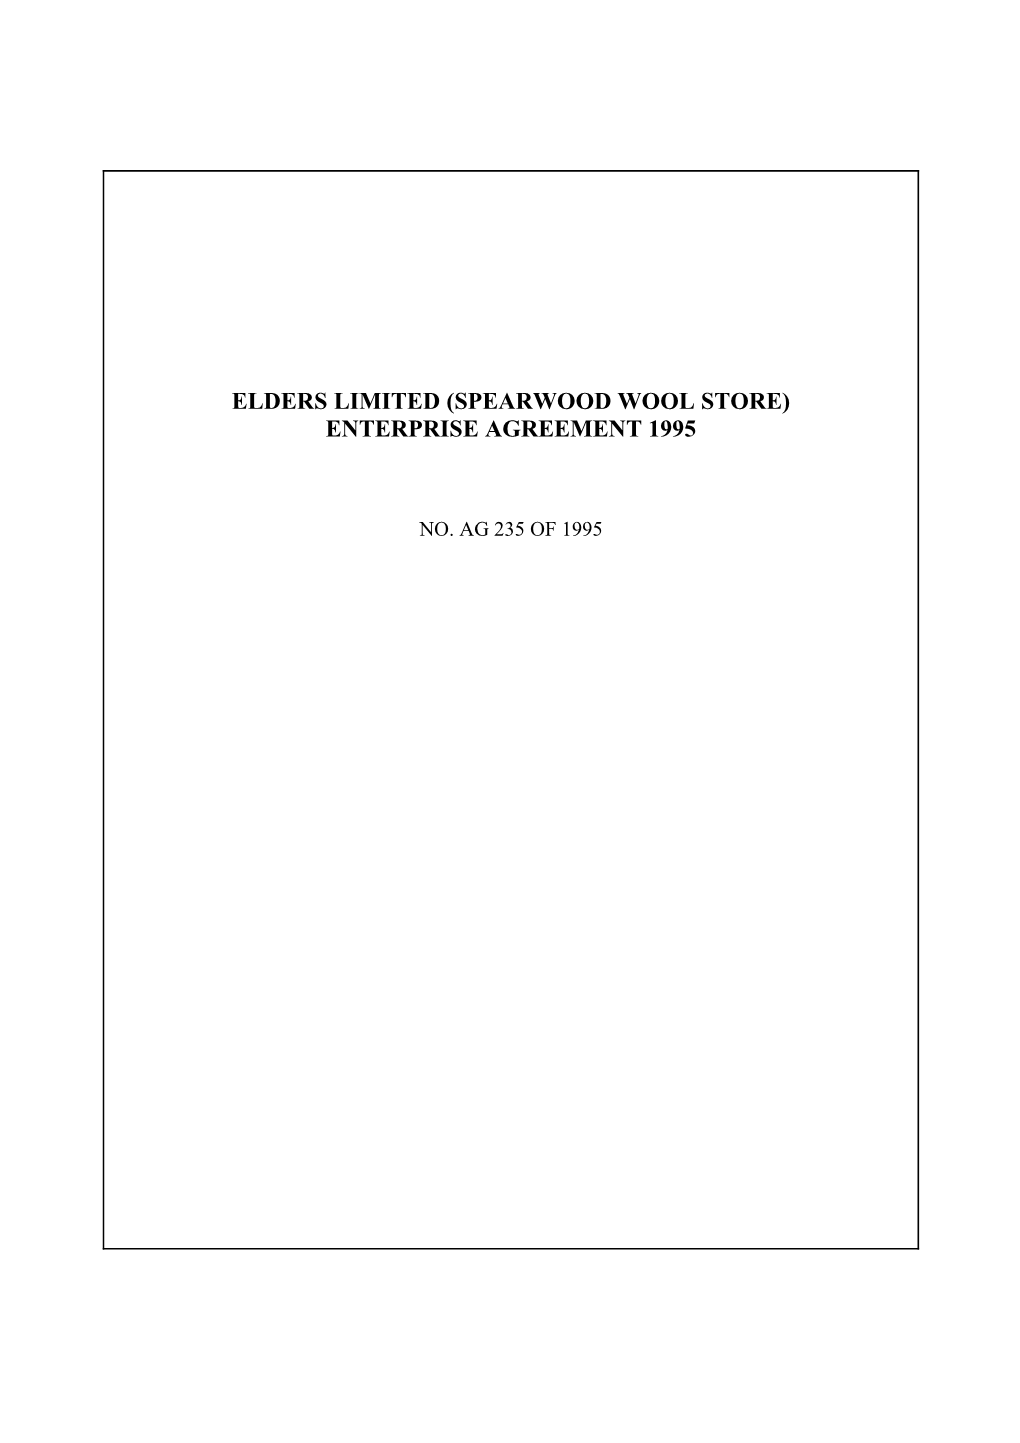 Elders Limited (Spearwood Wool Store) Enterprise Agreement 1995, No. AG 235 of 1995